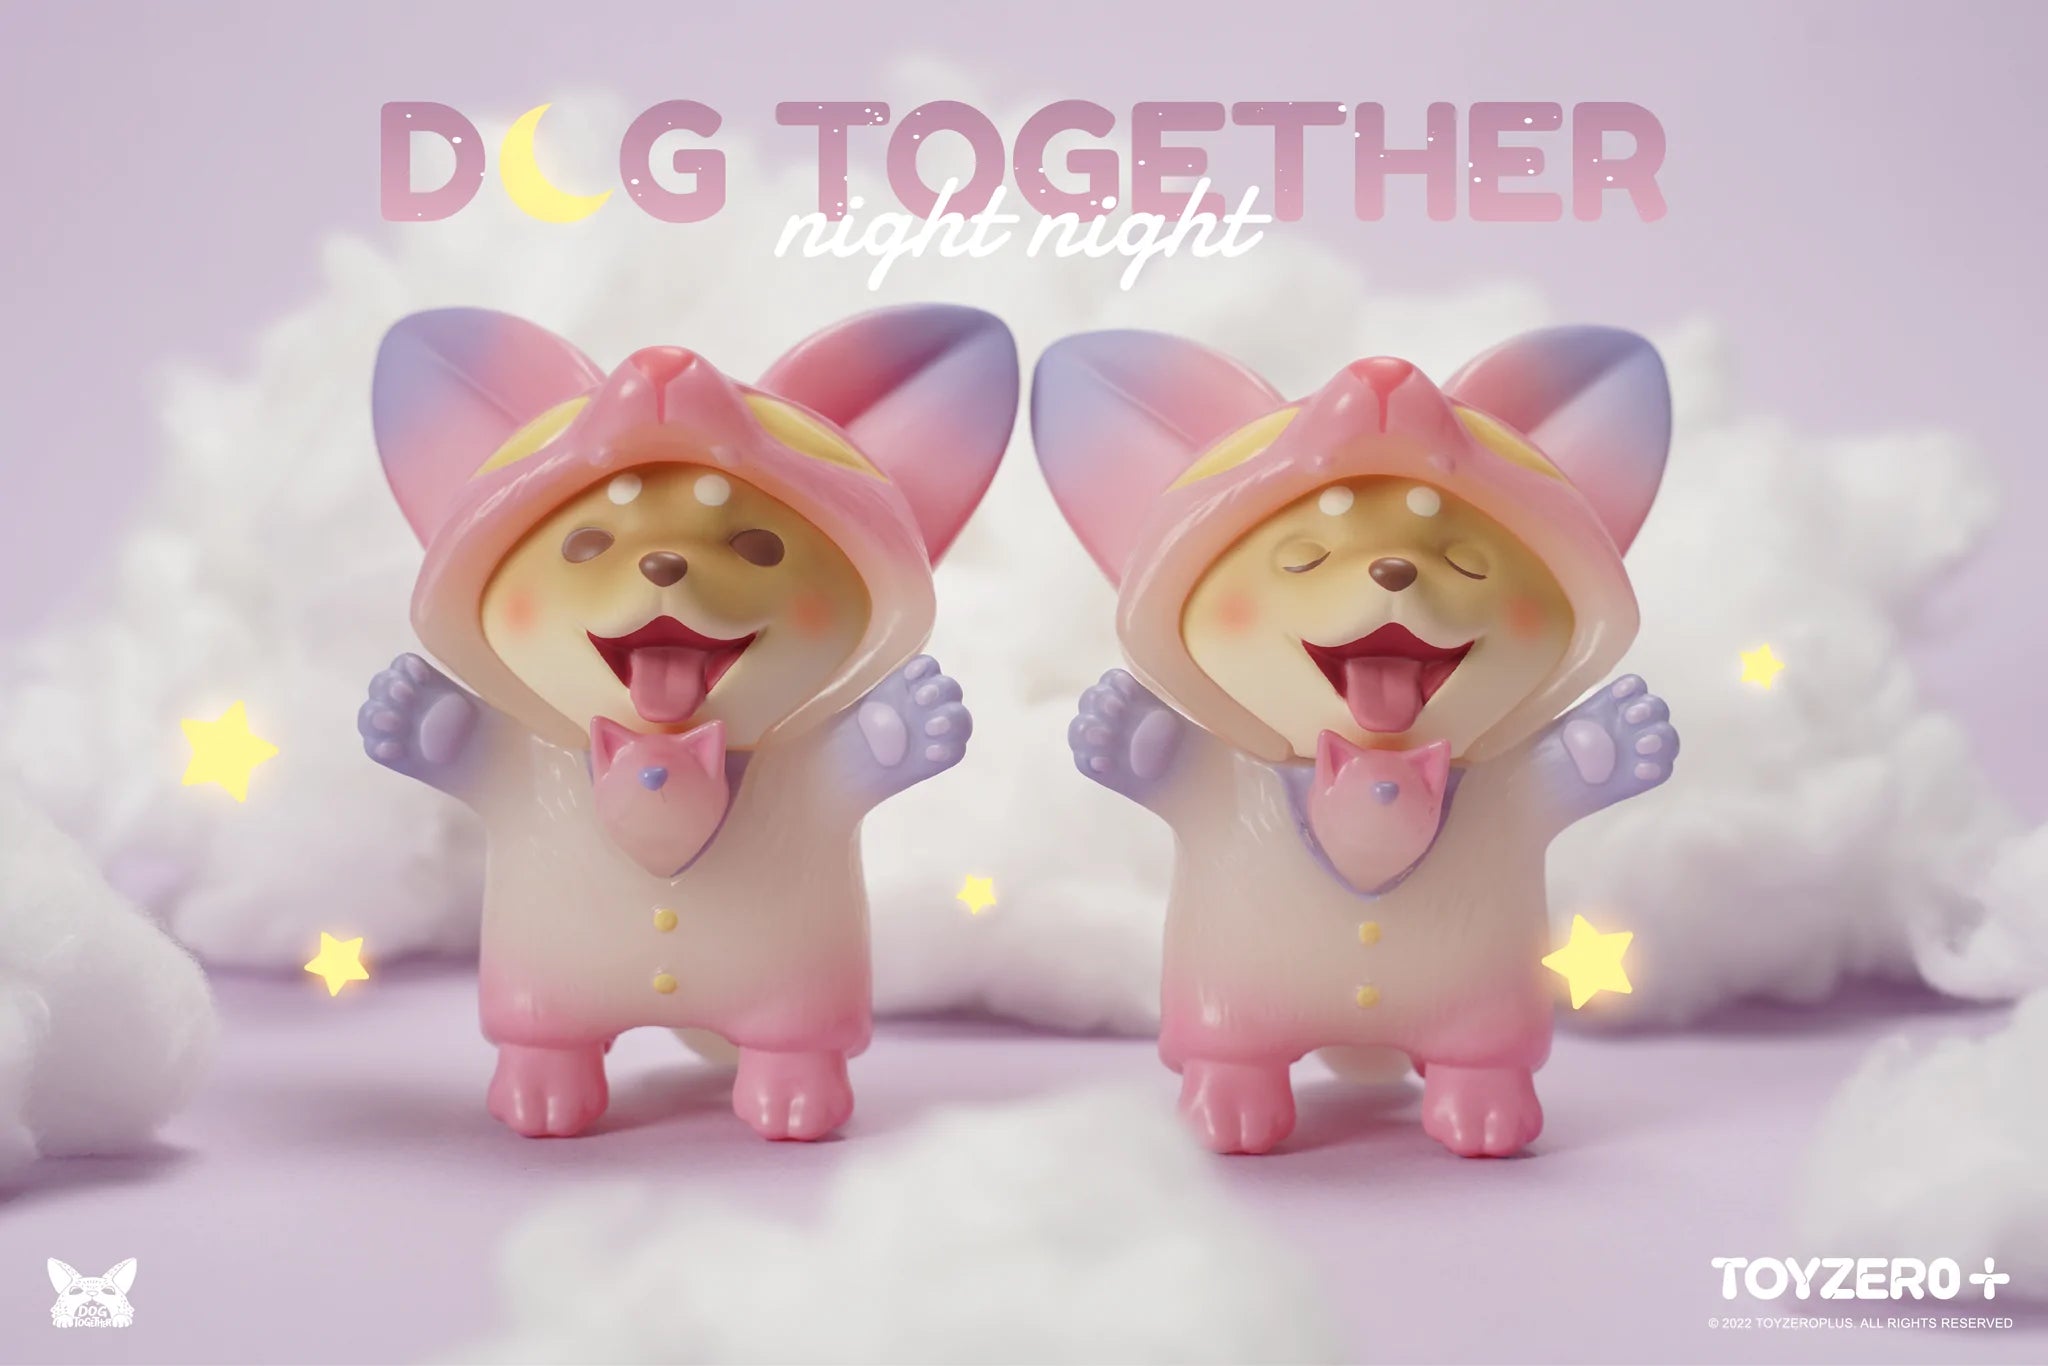 Night Night Dou Dou (Daydream & Good Night Edition) by Dogtogether